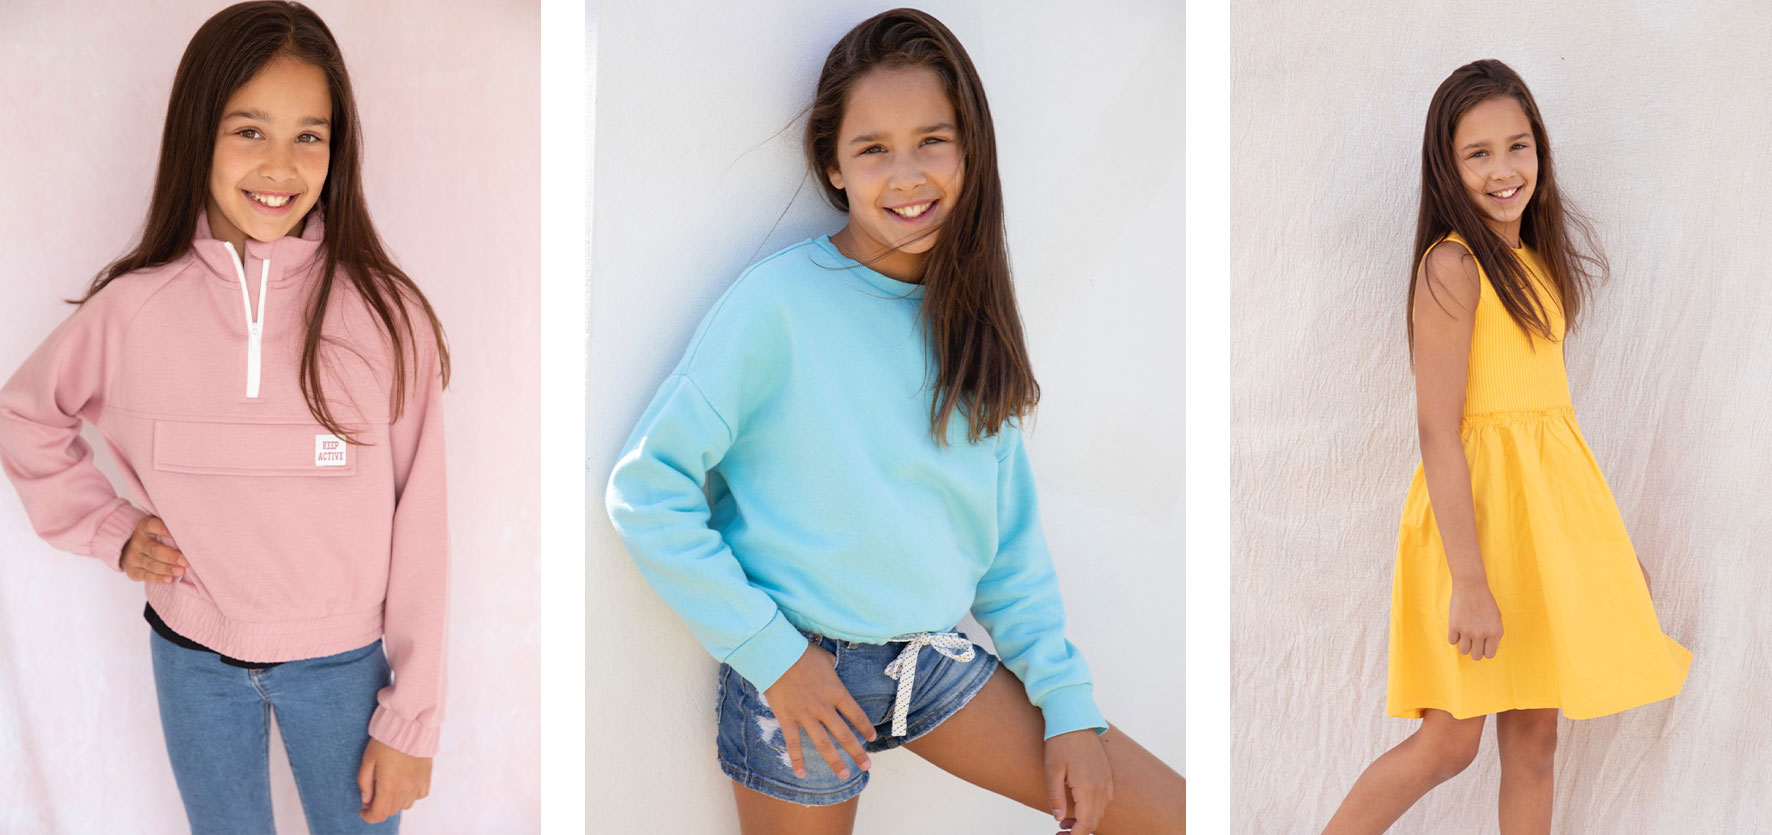 Sandra Reynolds teen model agency shares three photos of new face teen model Ava